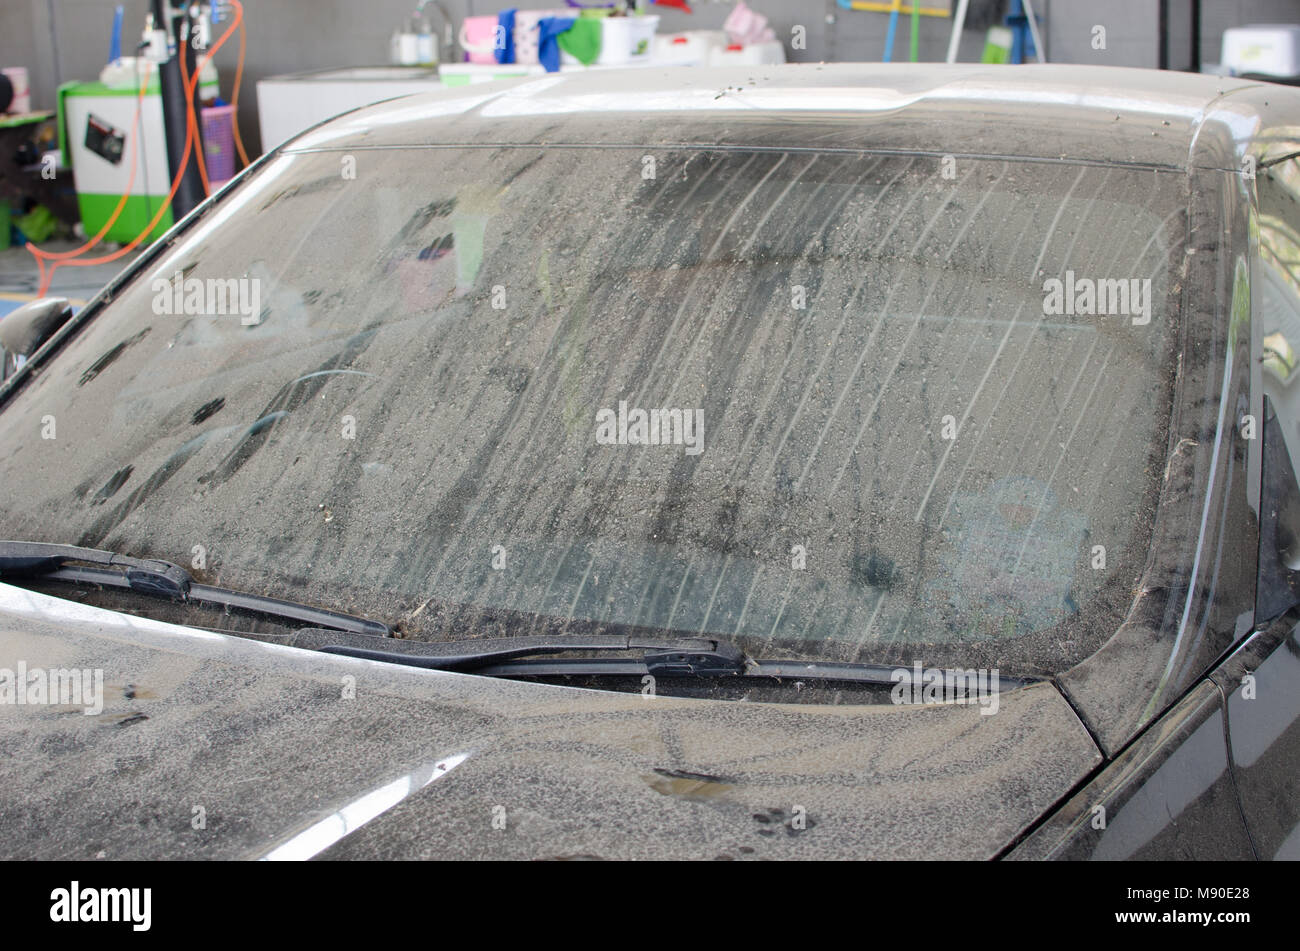 Dirty car window -Fotos und -Bildmaterial in hoher Auflösung – Alamy